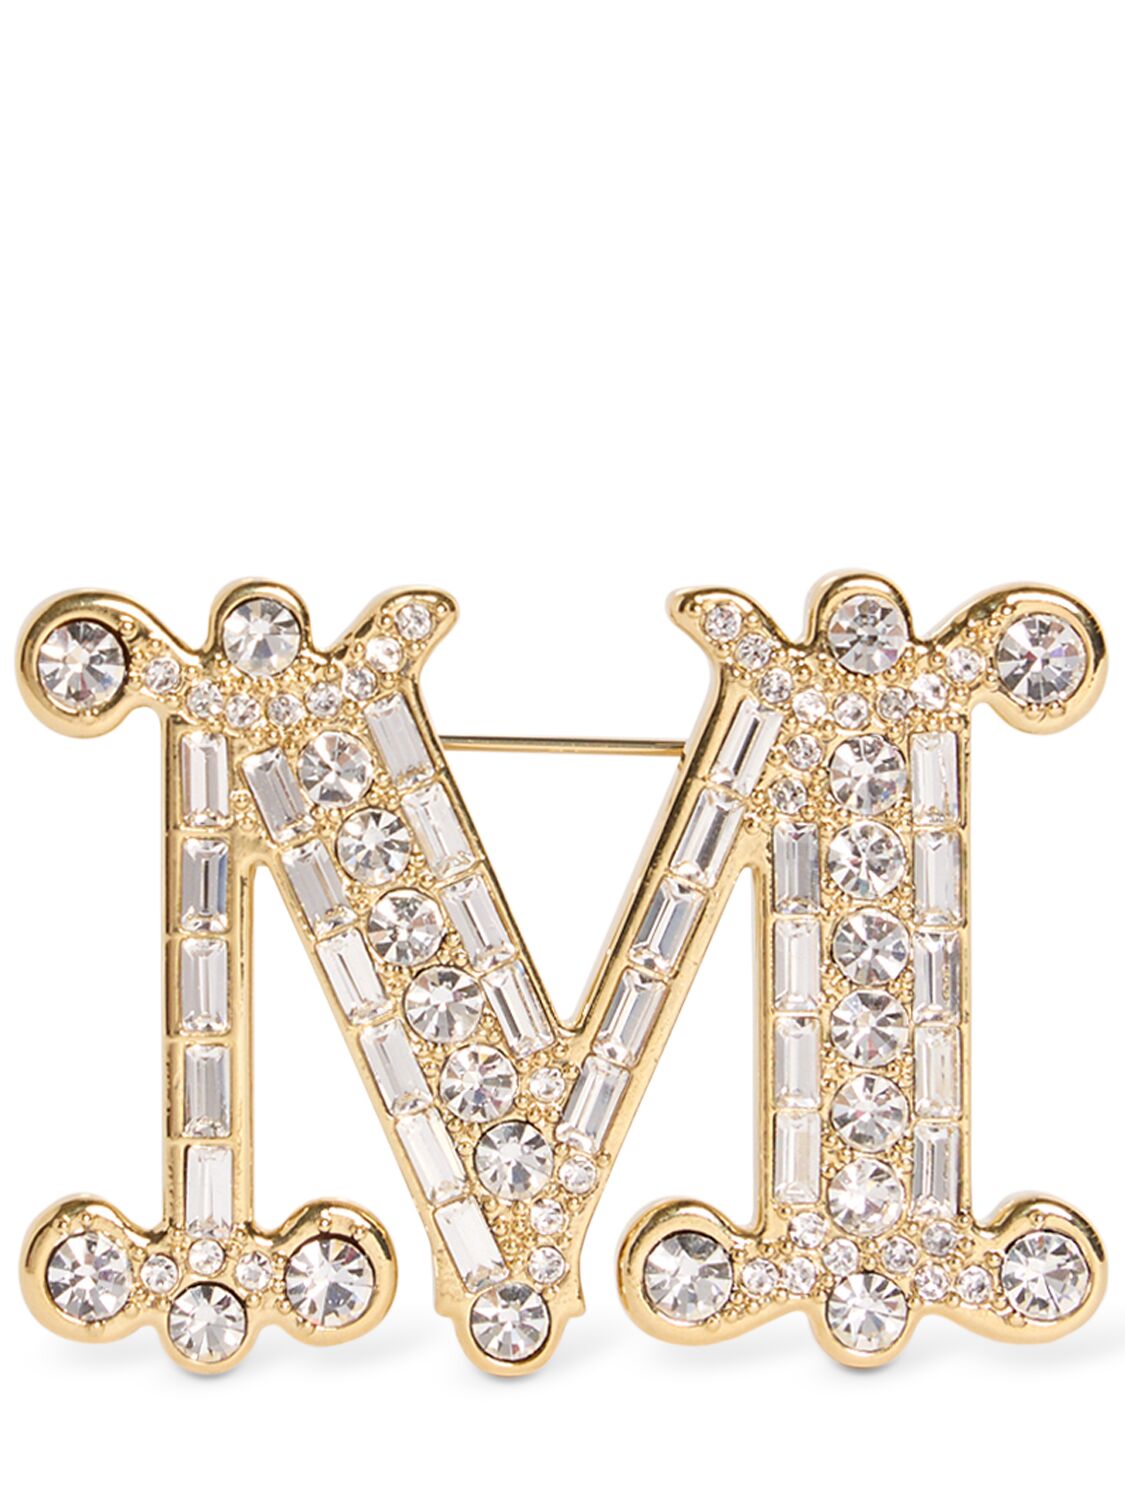 Max Mara Bath2 Crystal Pin In Gold